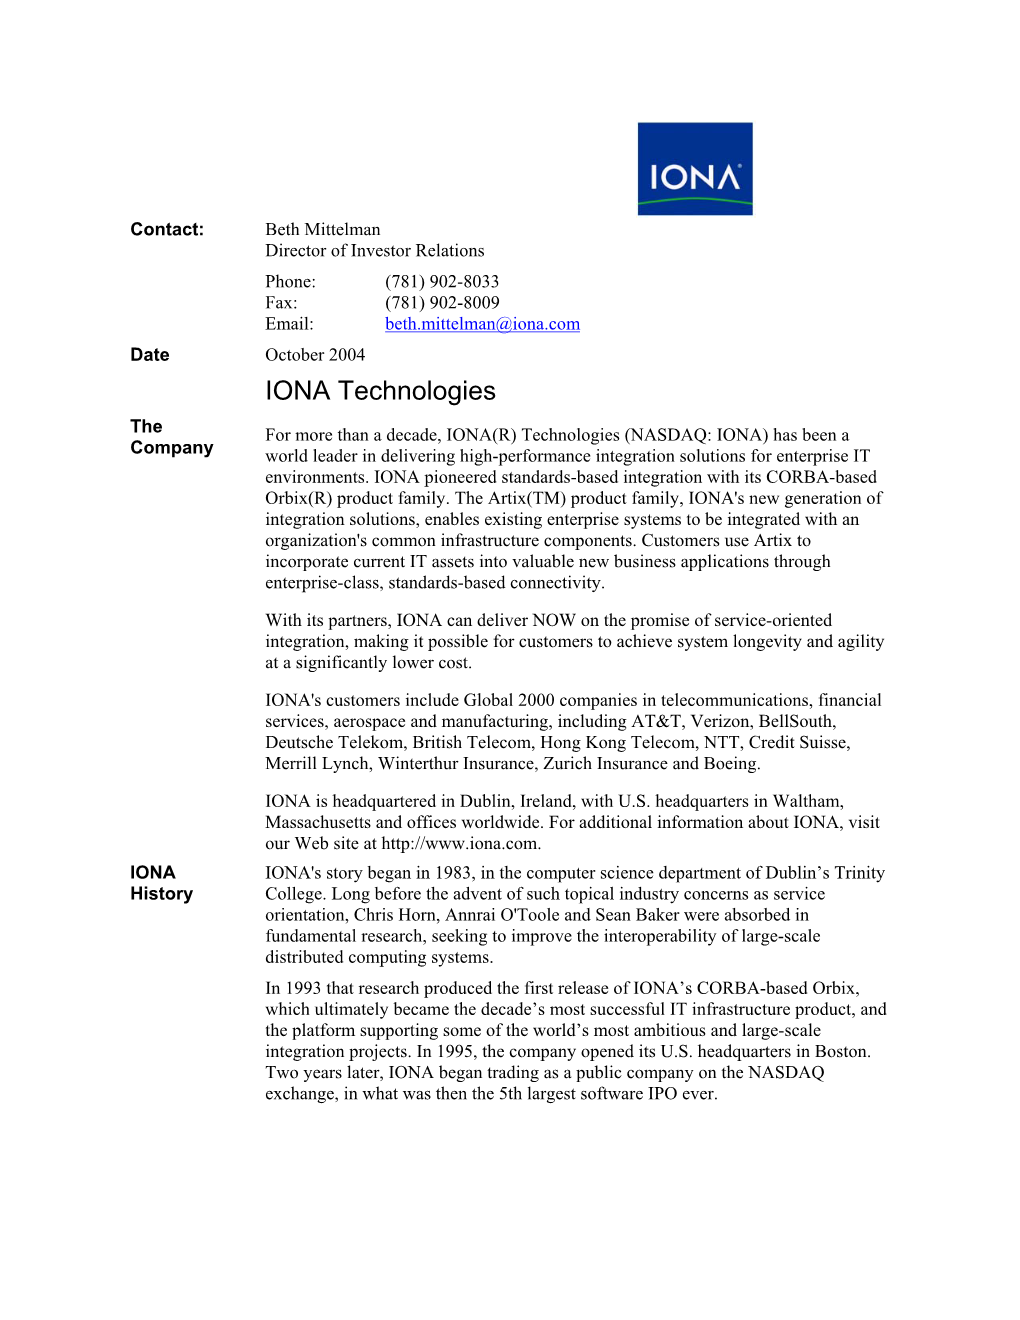 IONA Technologies